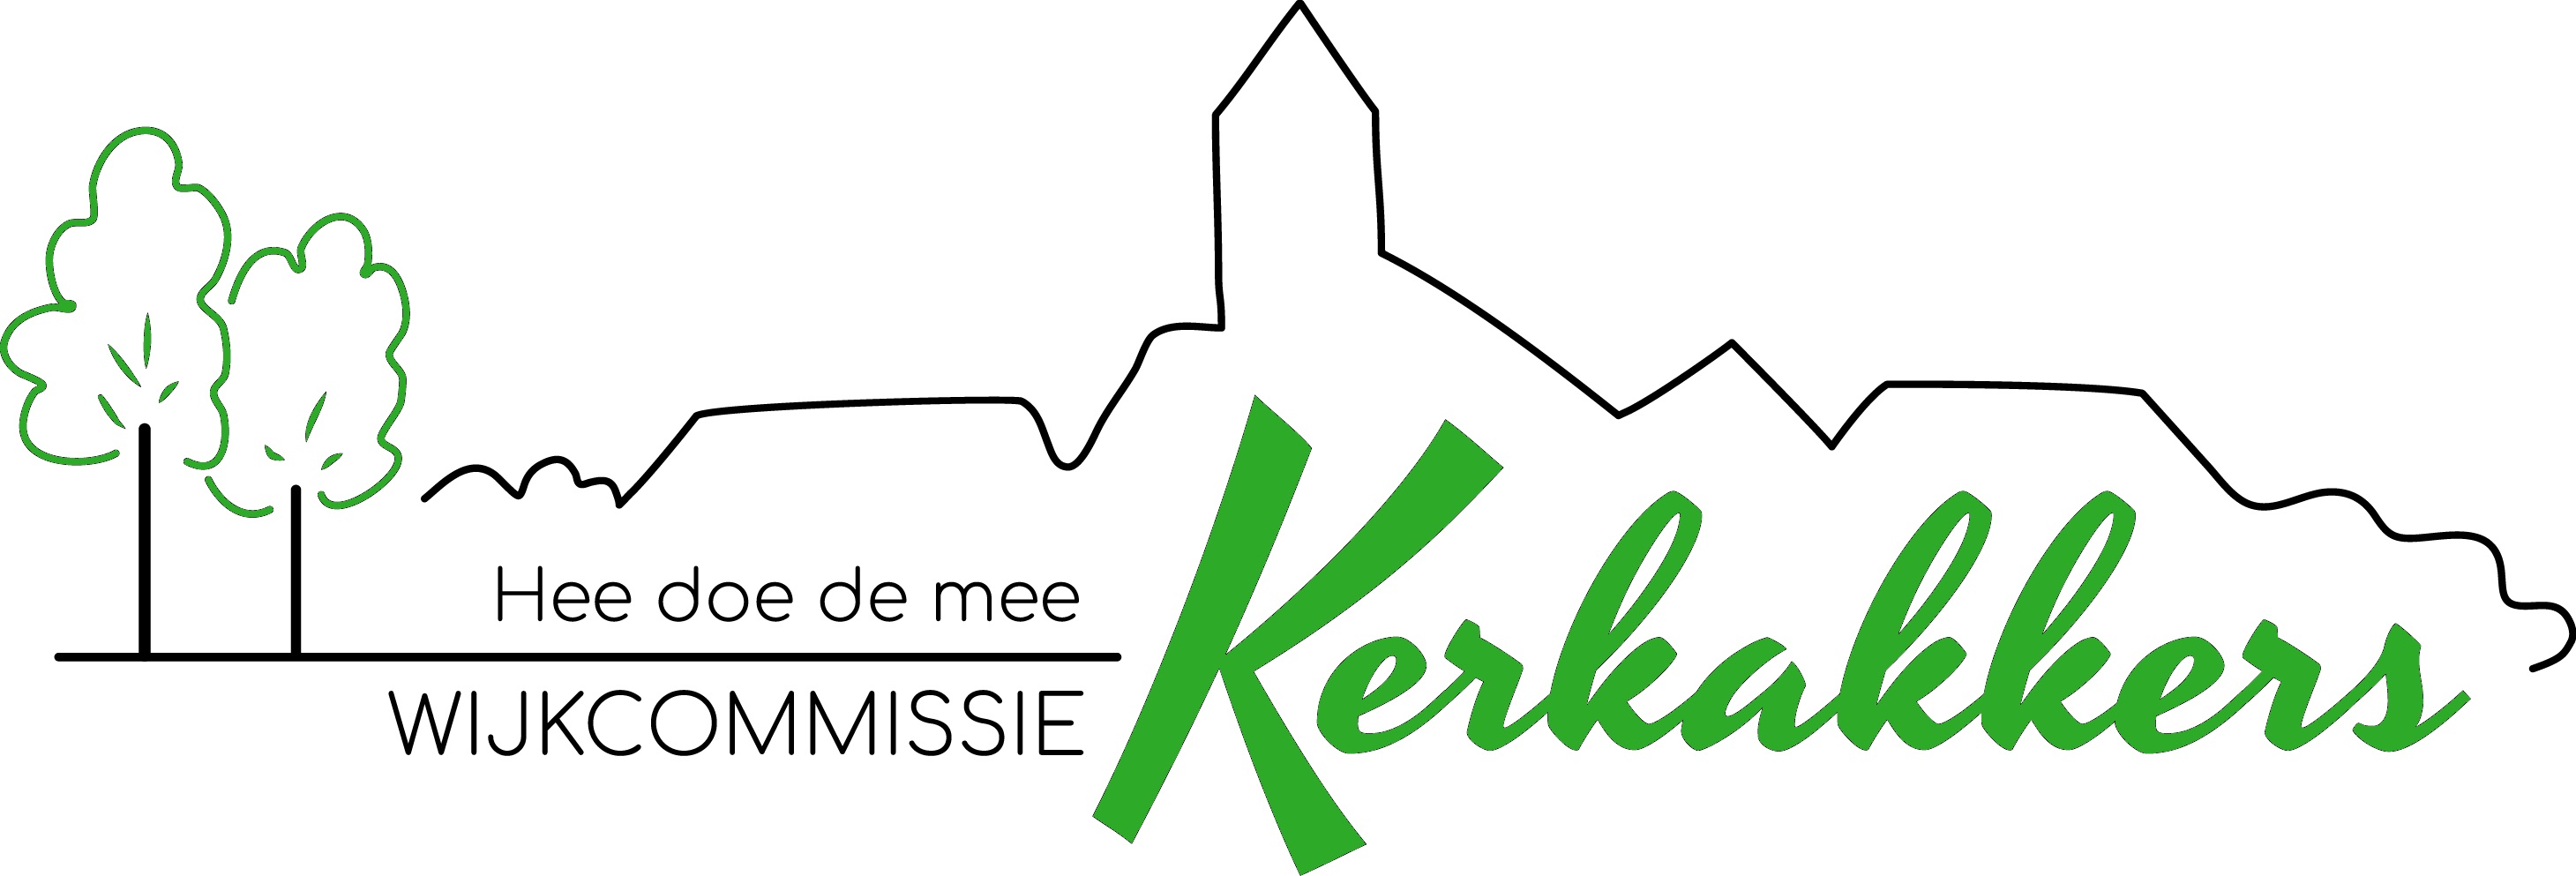 logo Kerkakkers